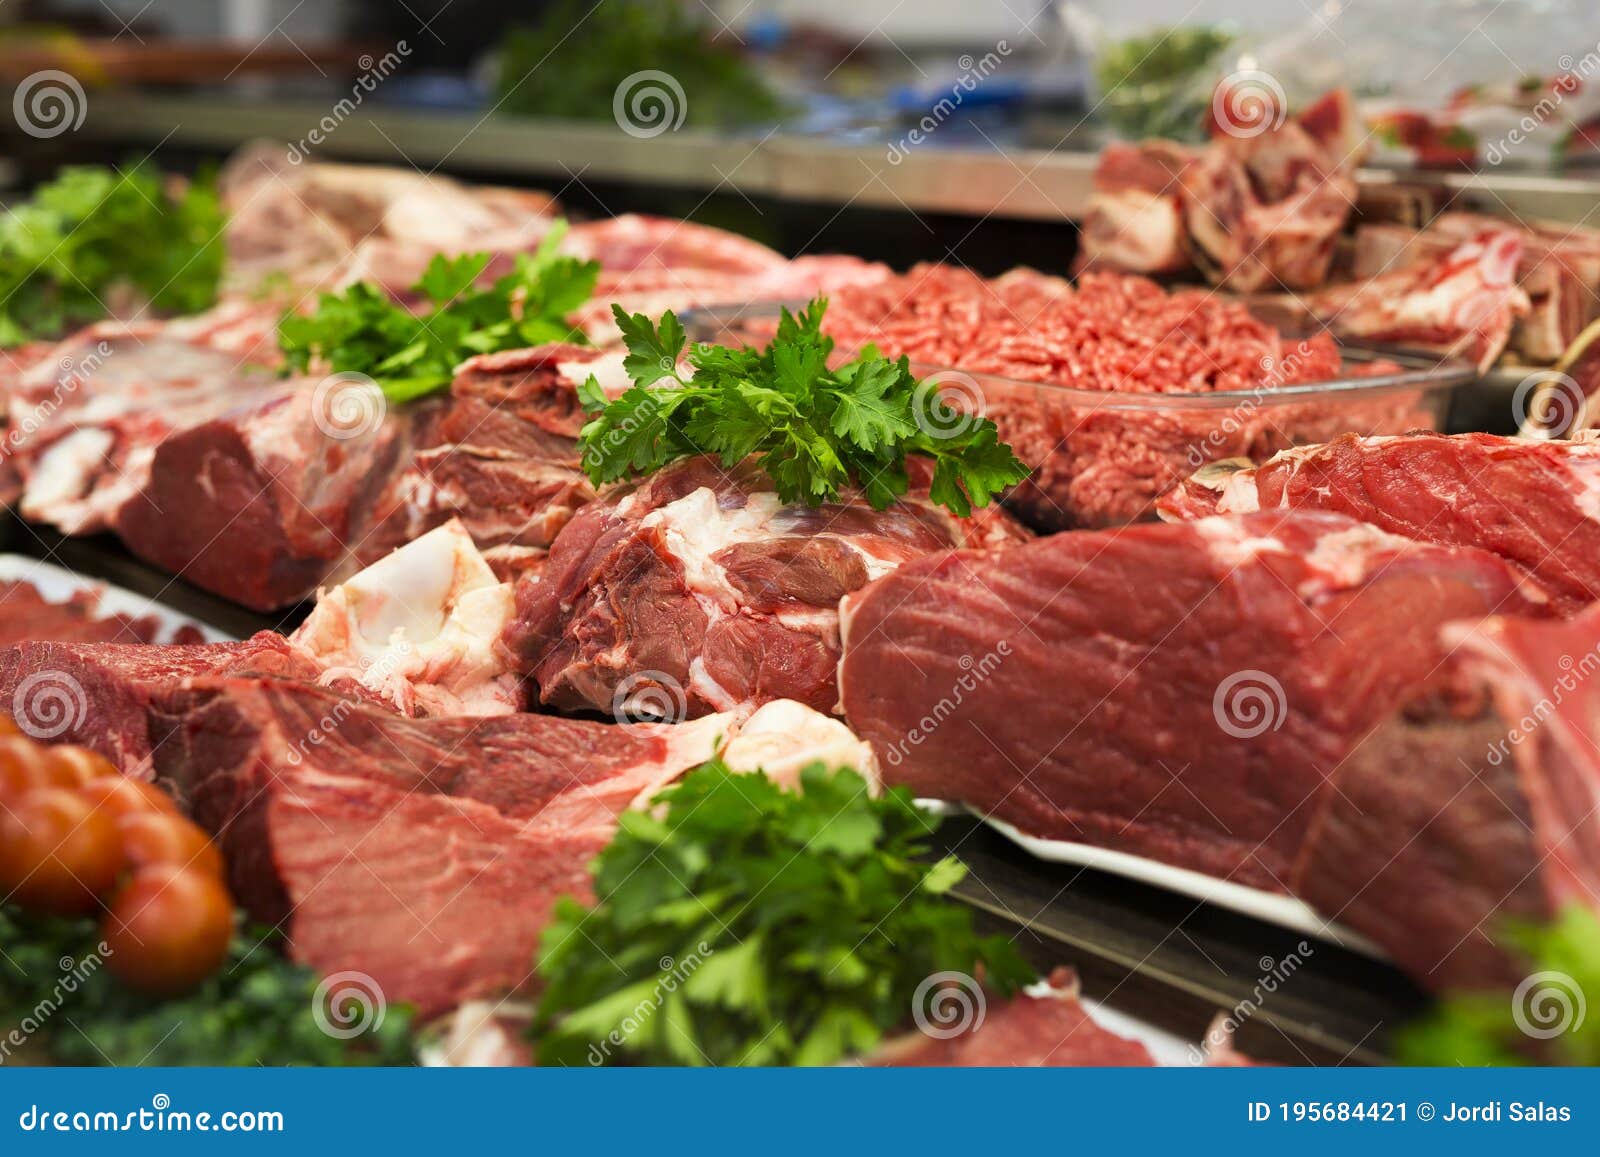 Raw Beef, Butchery Image & Photo (Free Trial)